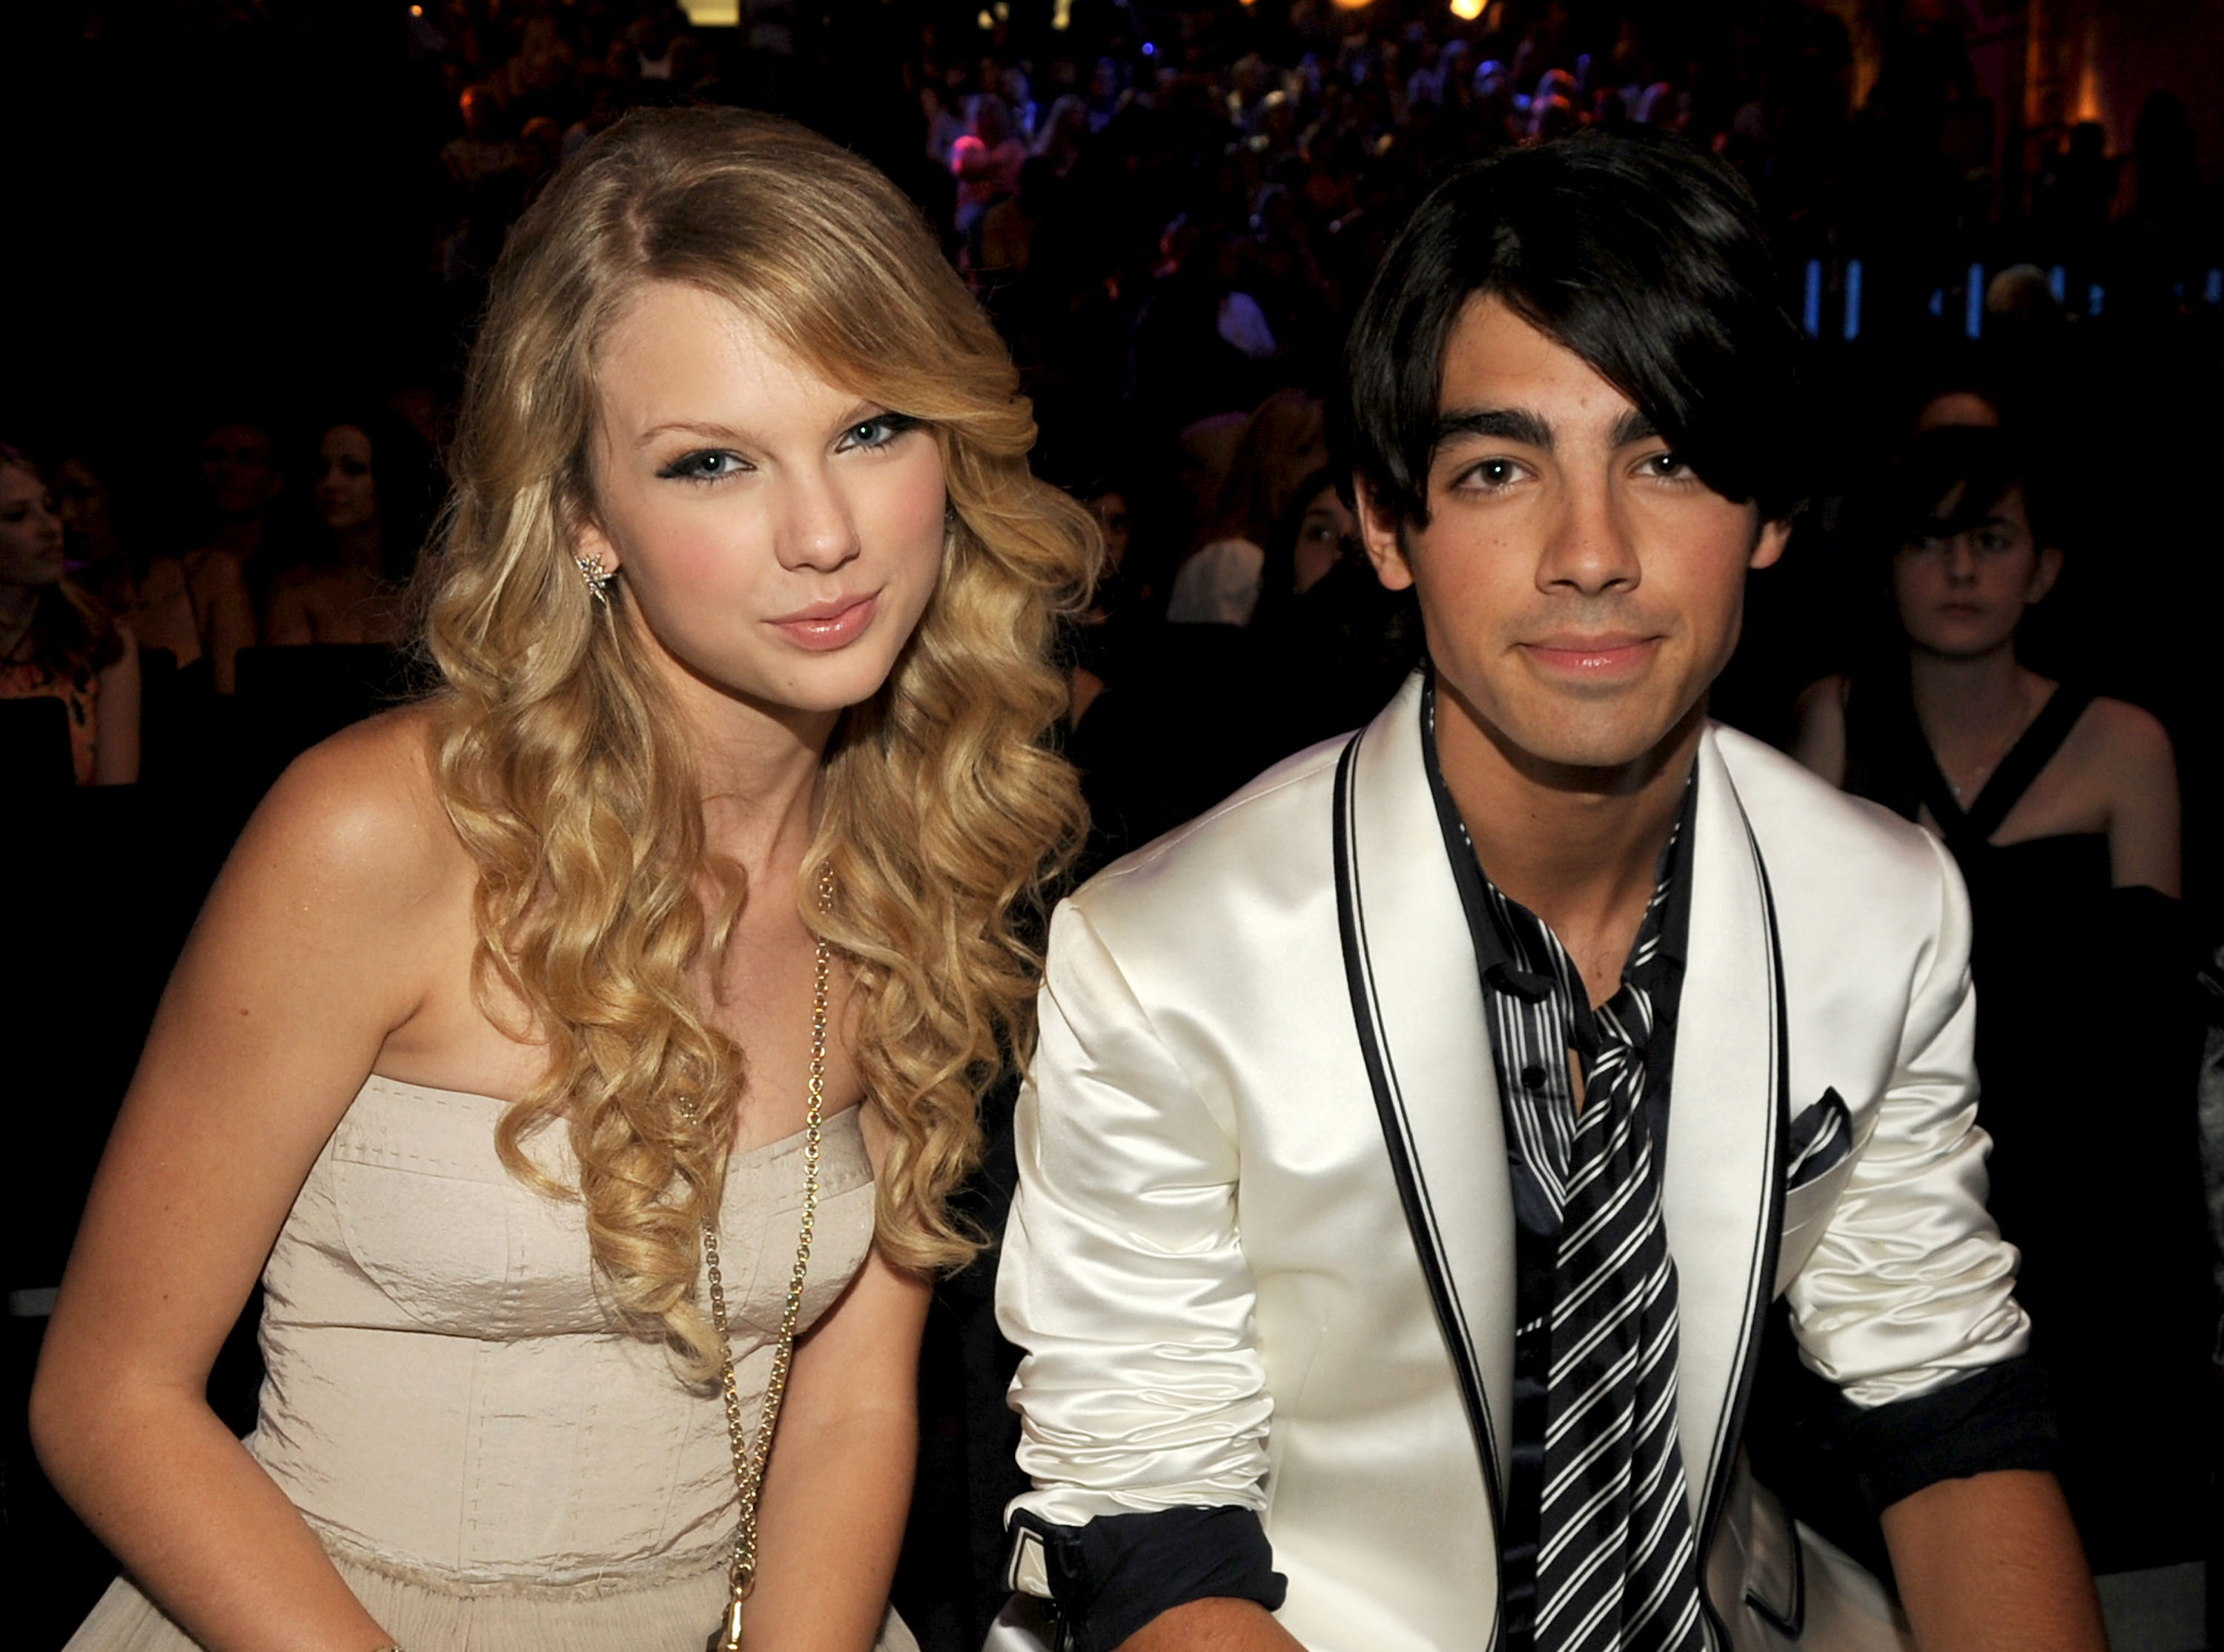 Joe Jonas and Taylor Swift pictured at the 2008 MTV VMAs